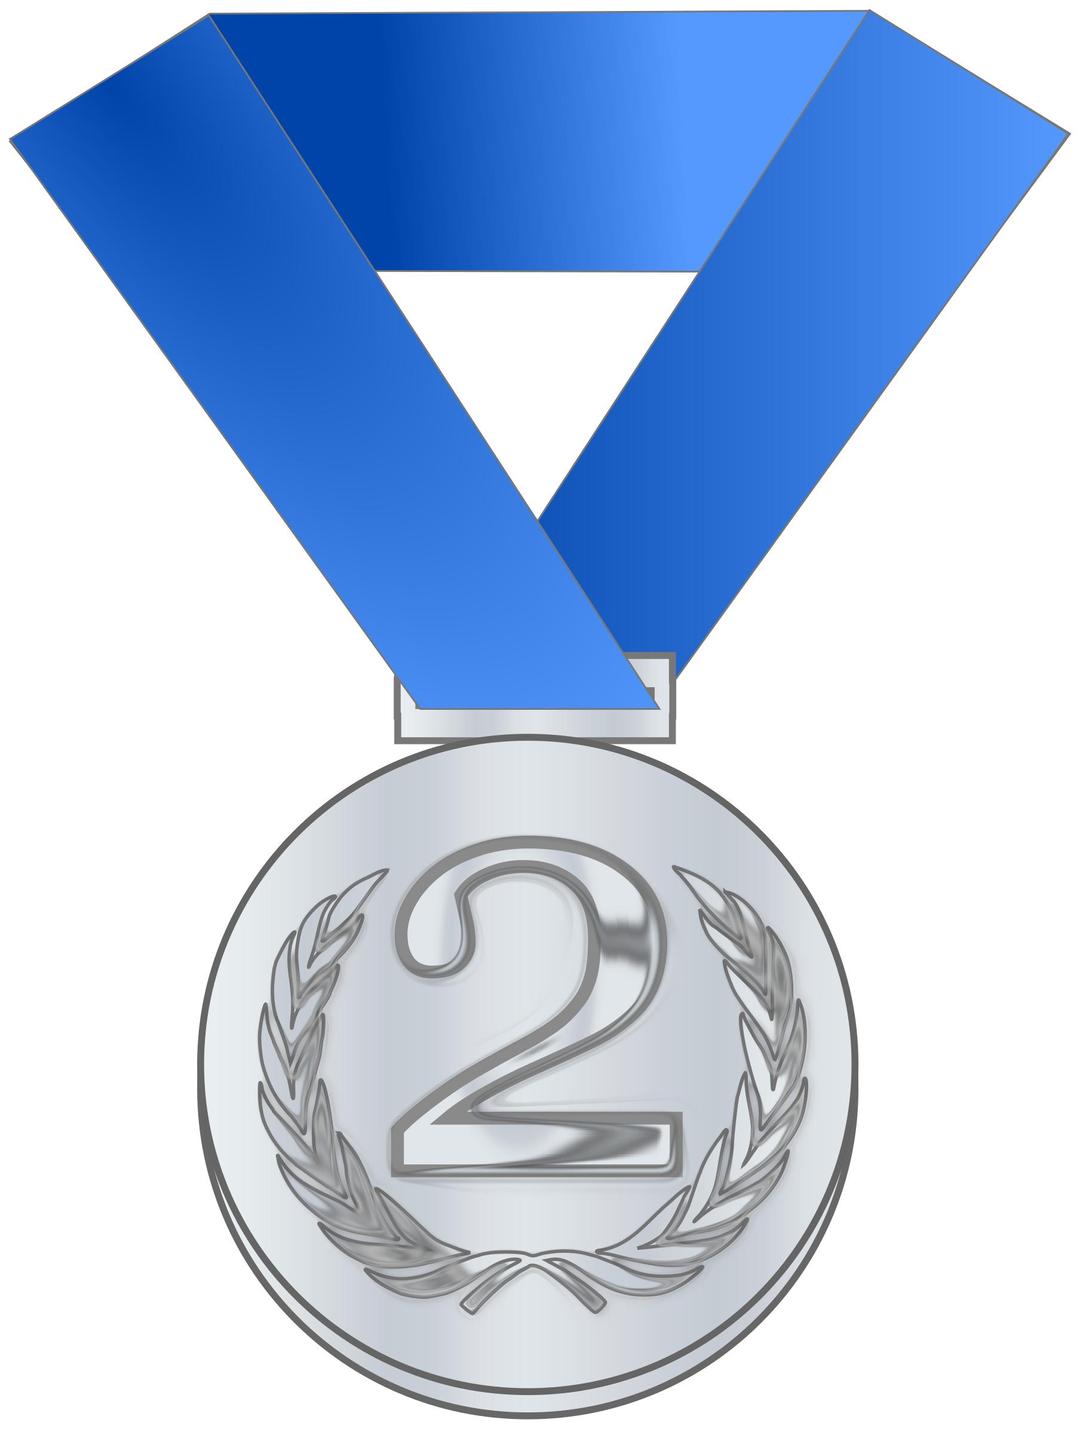 Silver medal / award png transparent